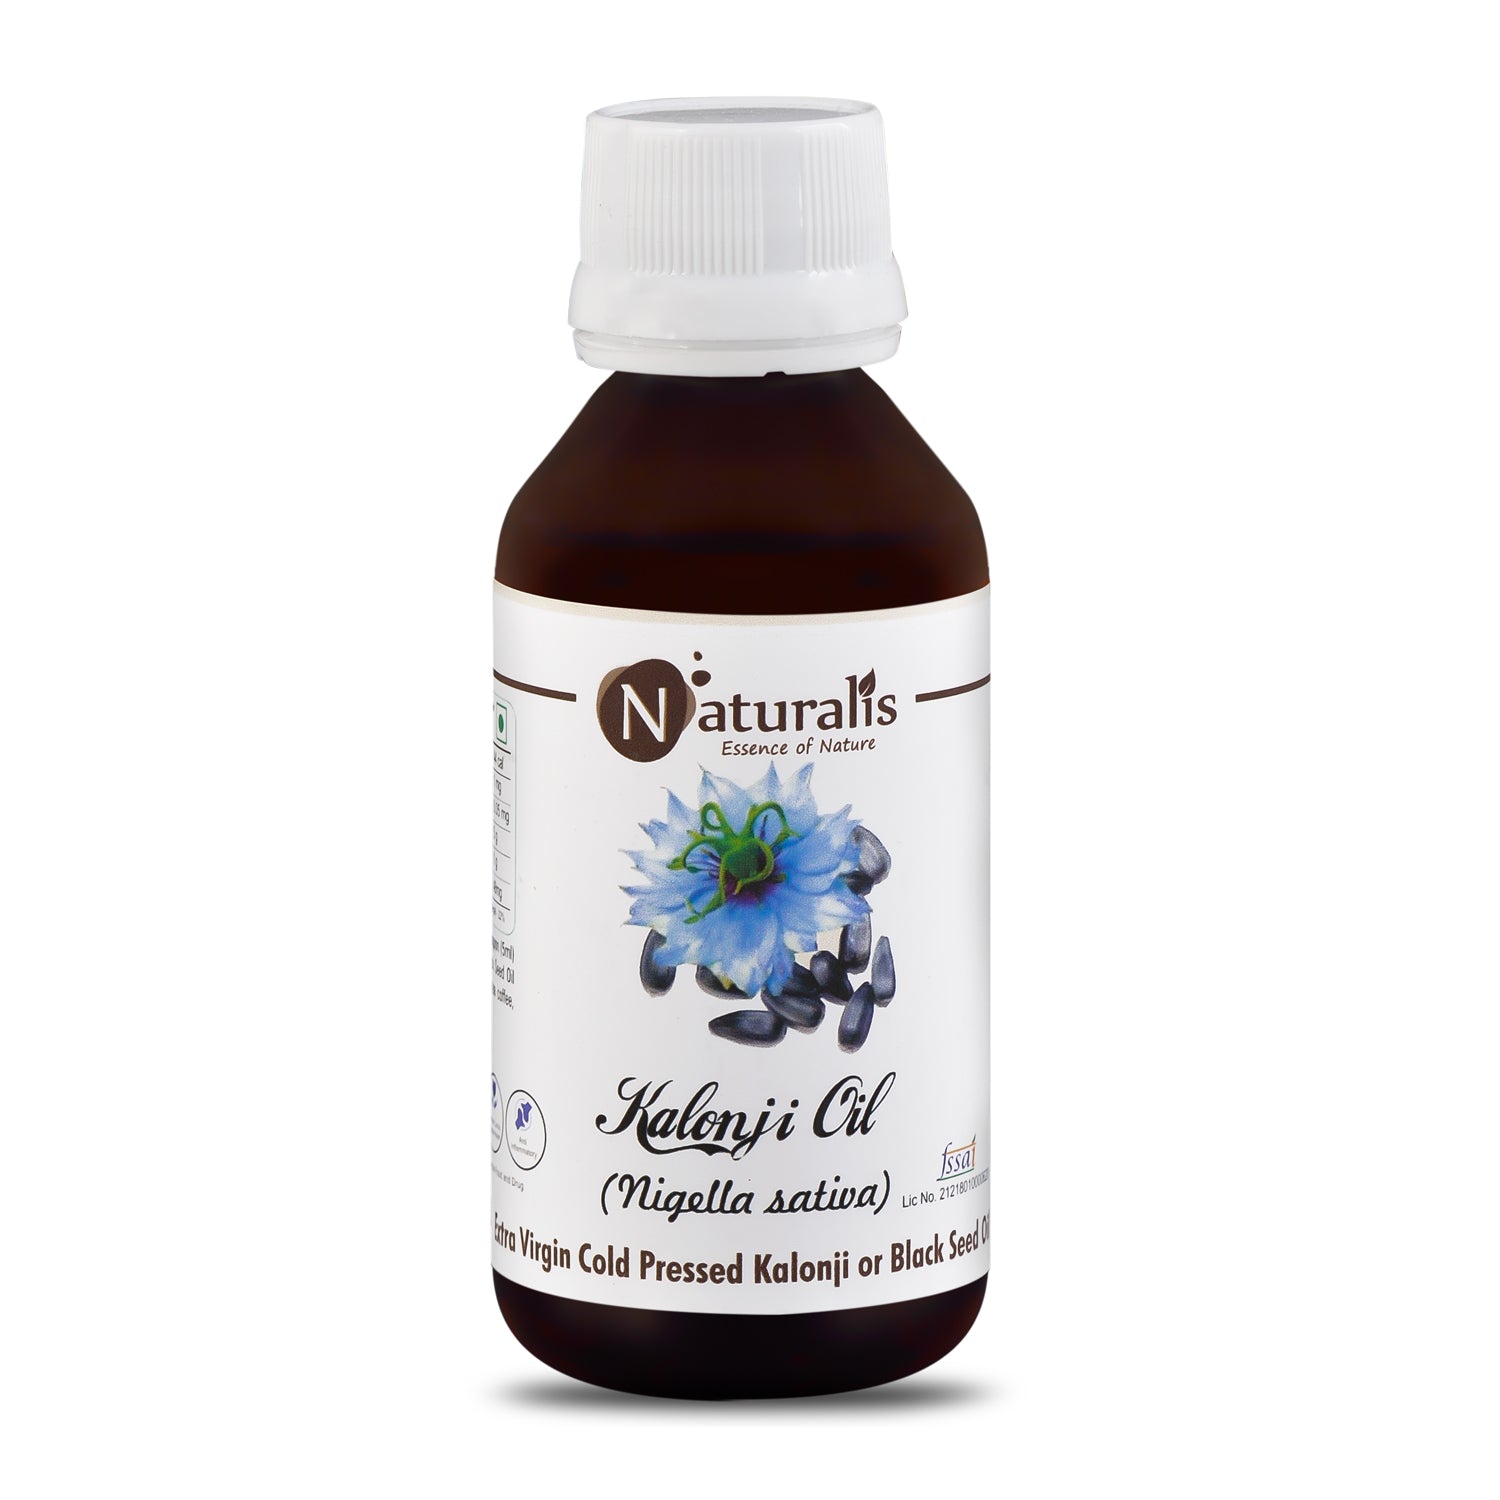 Naturalis Kalonji Oil / Black Seed Oil – Extra Virgin Cold Pressed - Naturalis